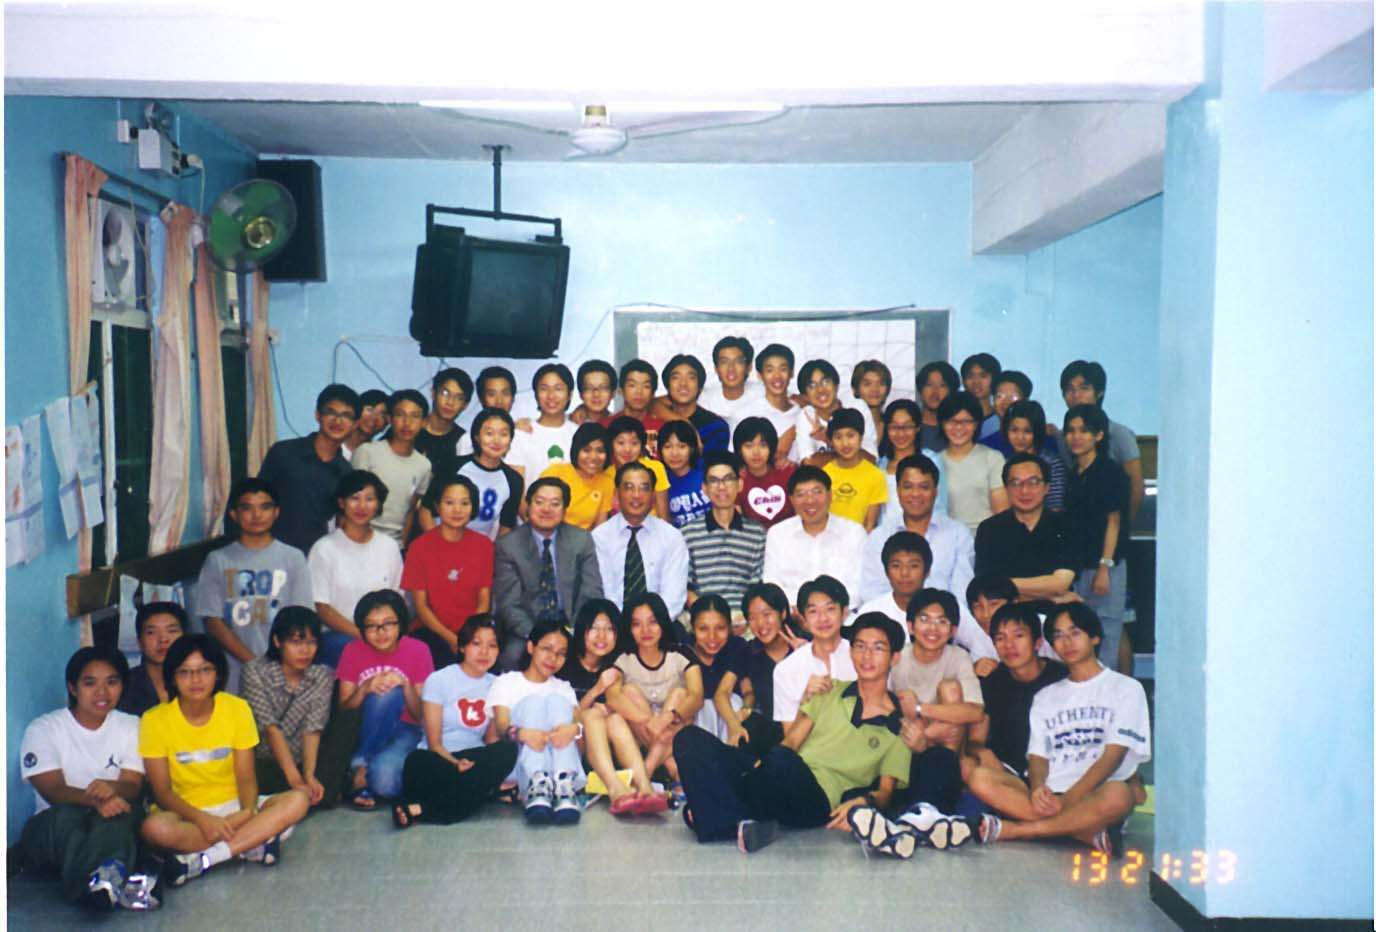 Leadership training camp – August 1999